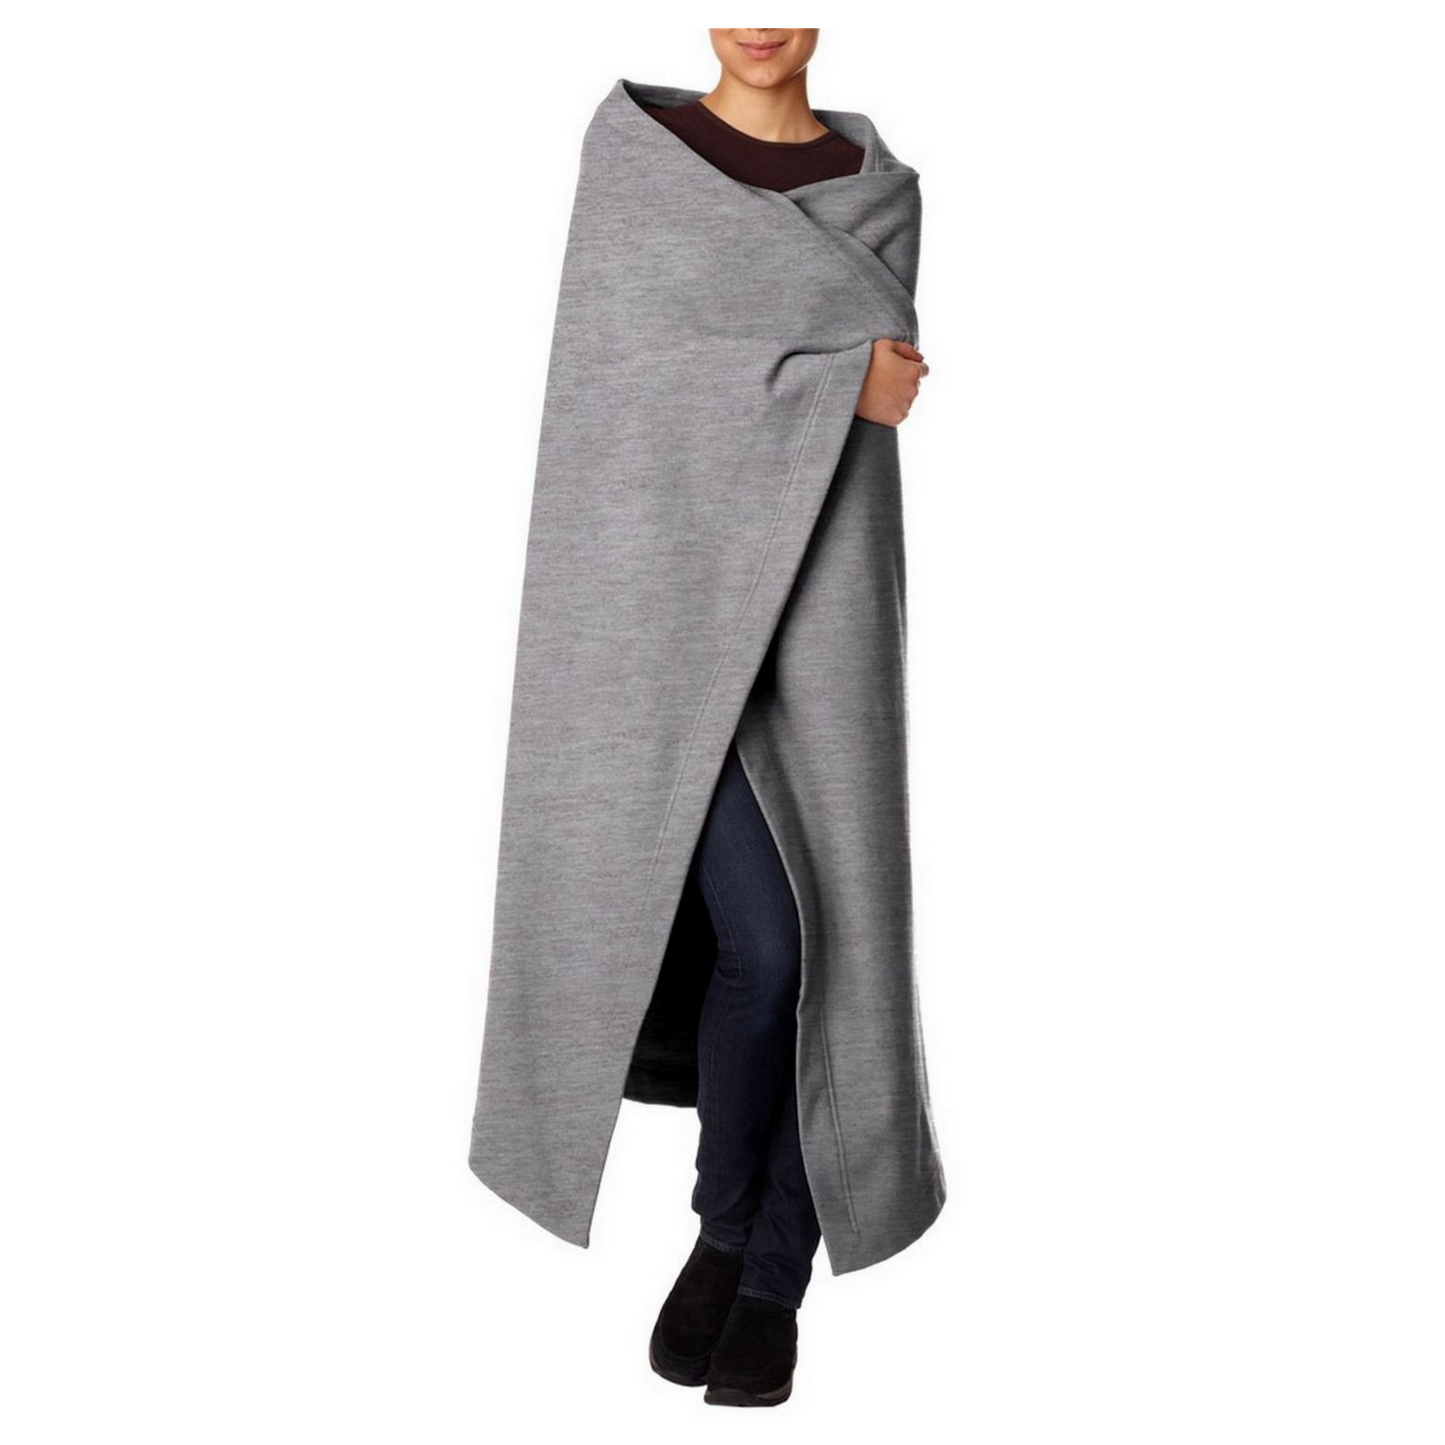 Drummond Island Fleece Blanket 50” X 60” - 2 colors